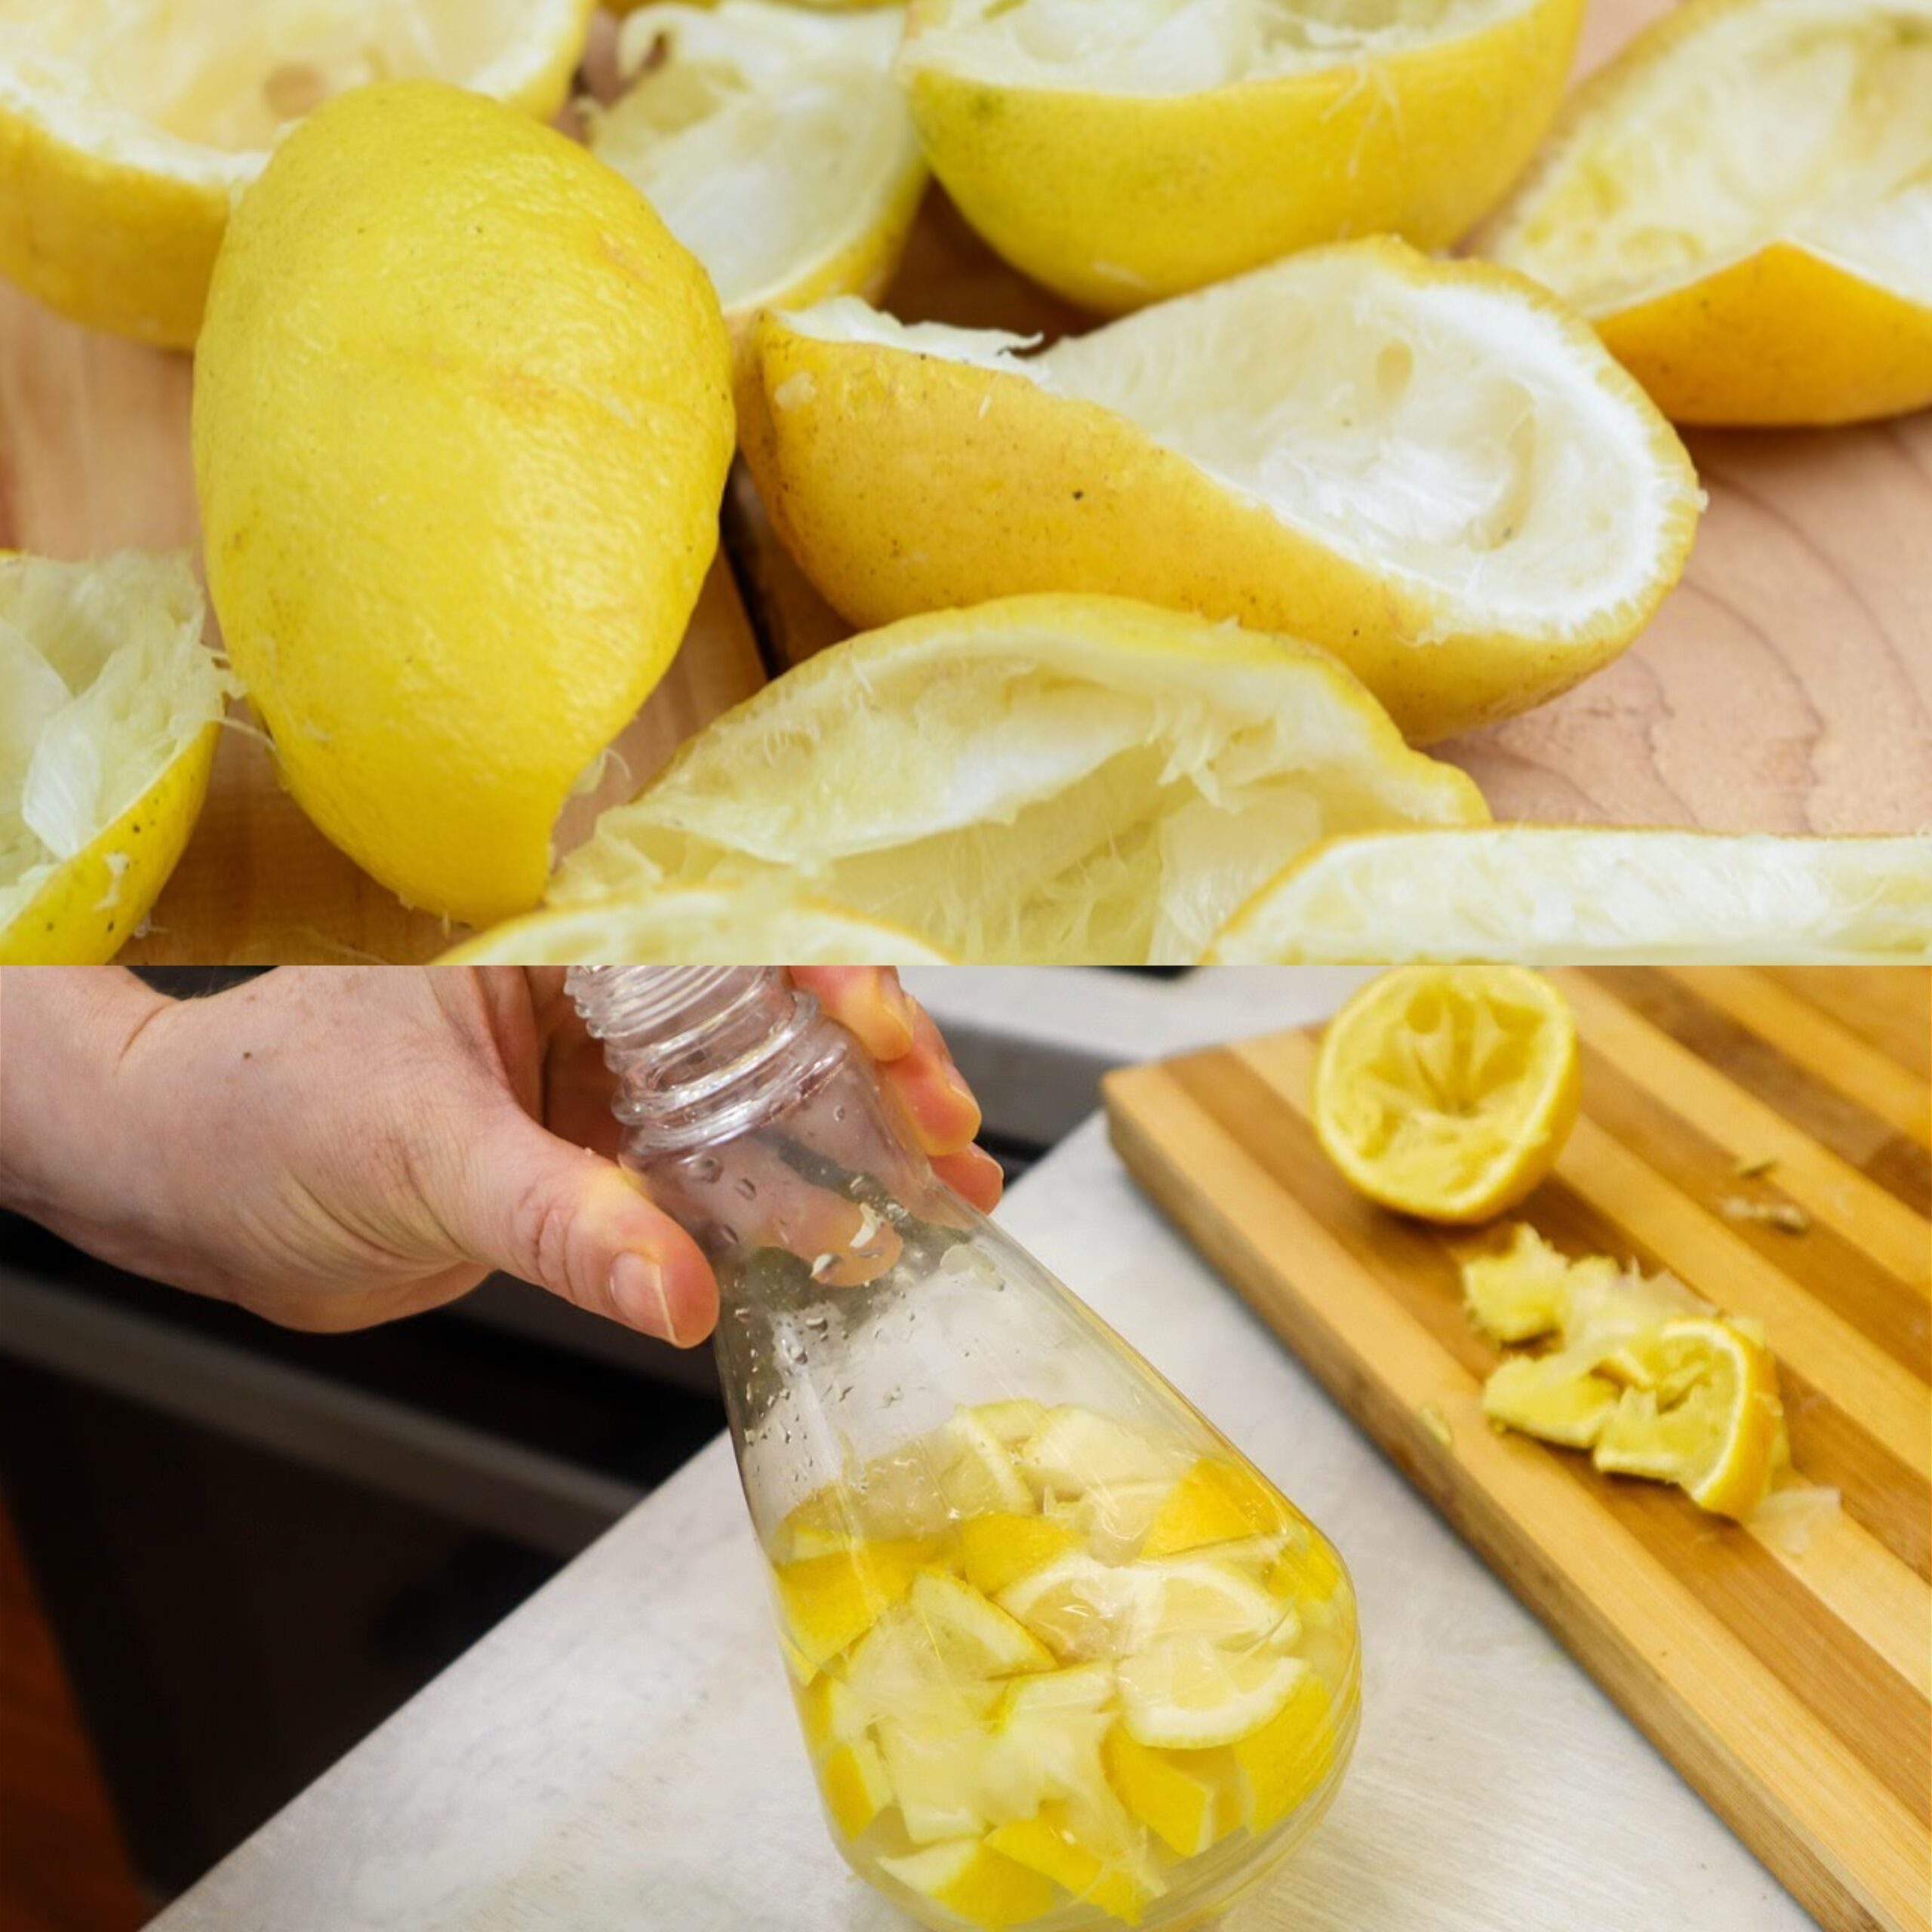 Don’t throw away the lemon peel, here’s why